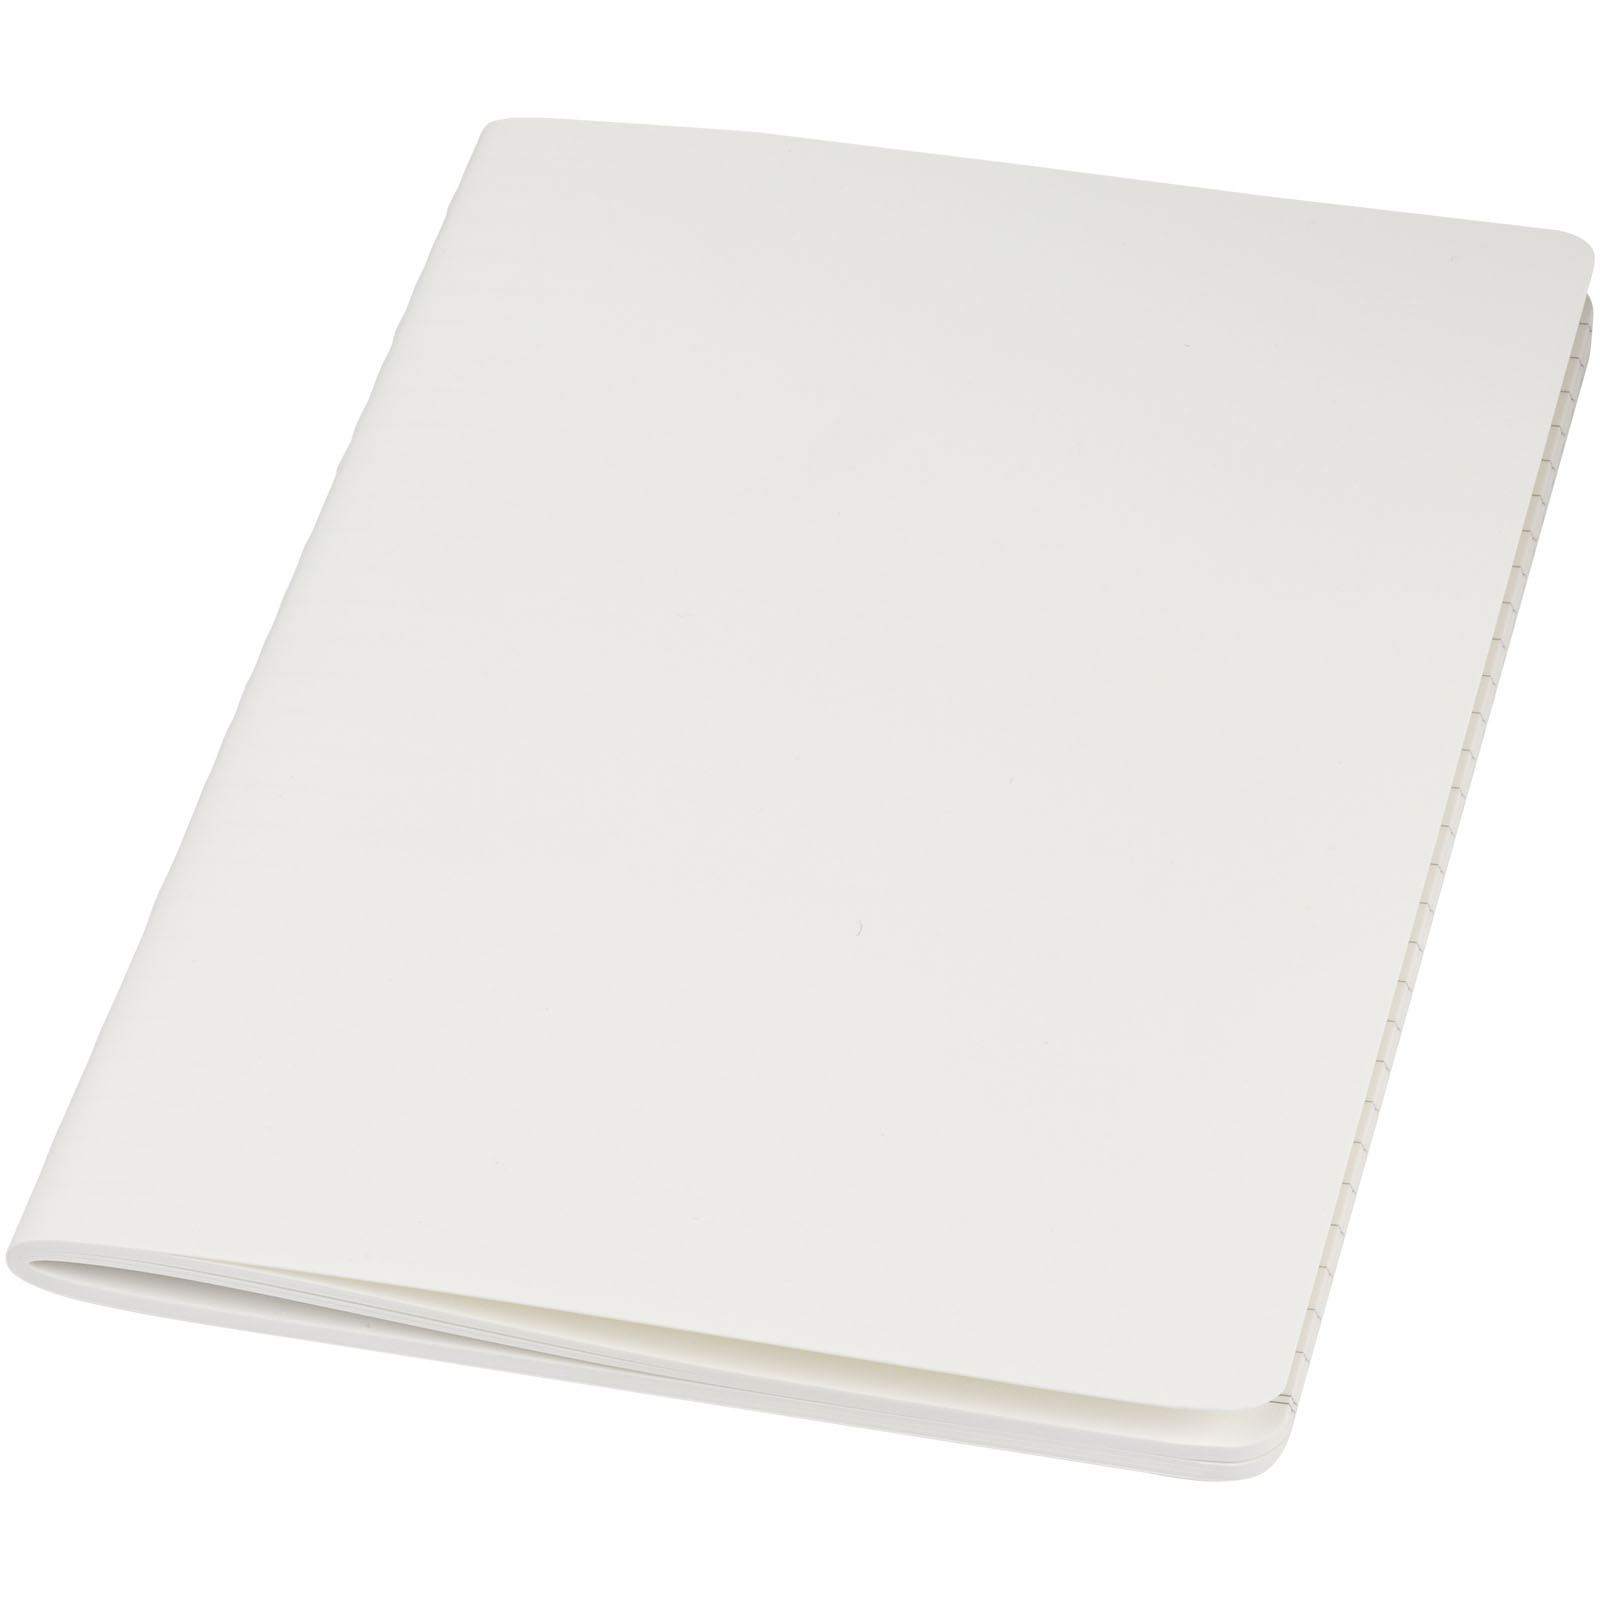 Notebooks & Desk Essentials - Shale stone paper cahier journal